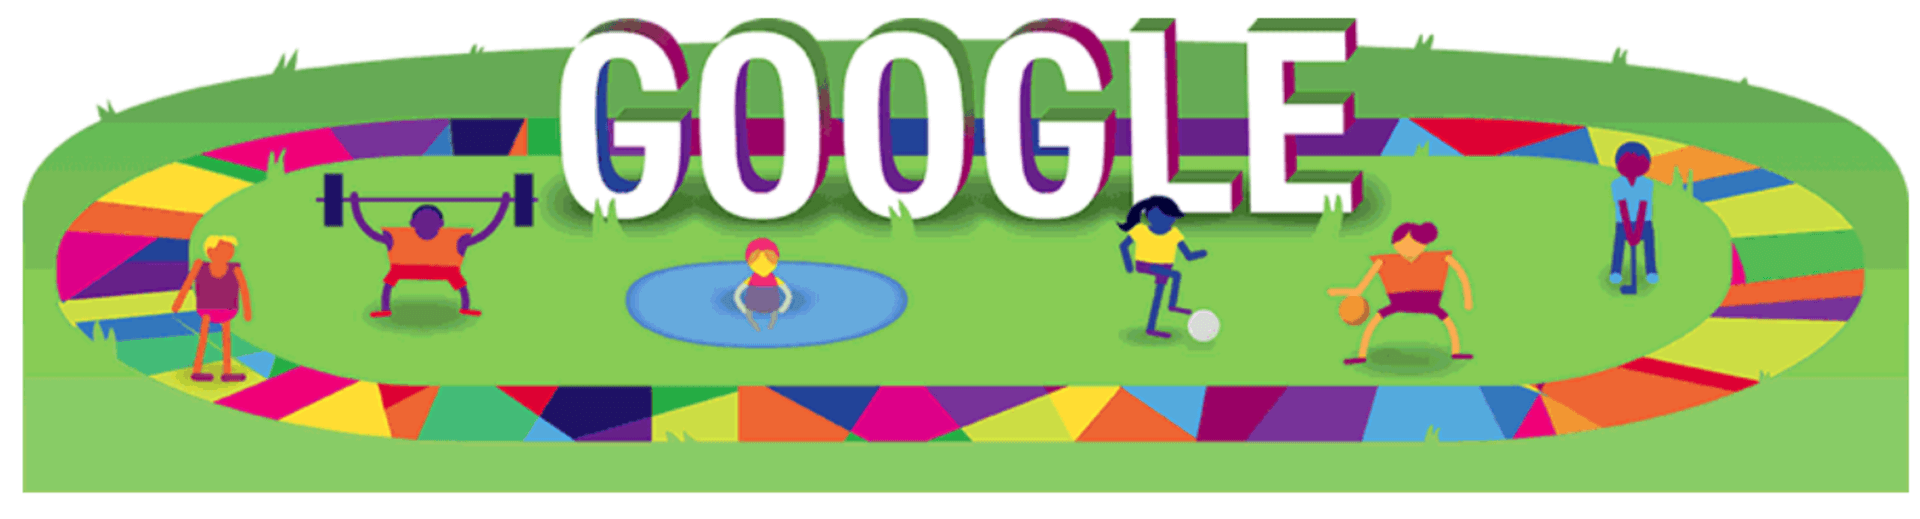 Olympic Google Logo - Special Olympics World Games Google Logo Celebrates 47th Year Of